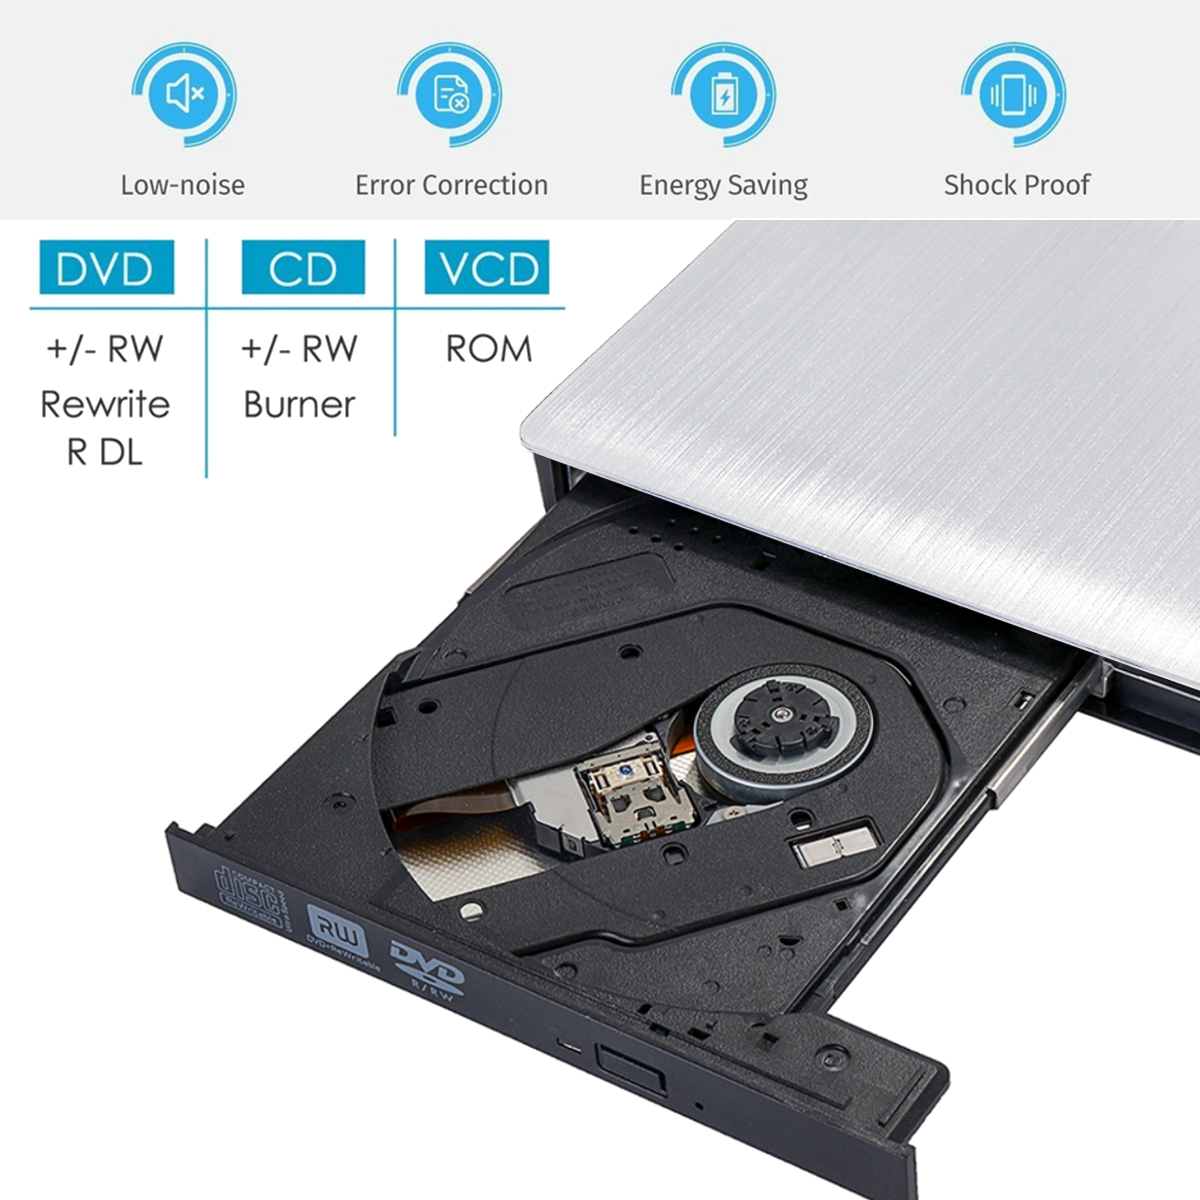 USB 3.0 Slim External DVD Optical Drive DVD-RW CD-RW Combo Drive Burner Reader Player 16